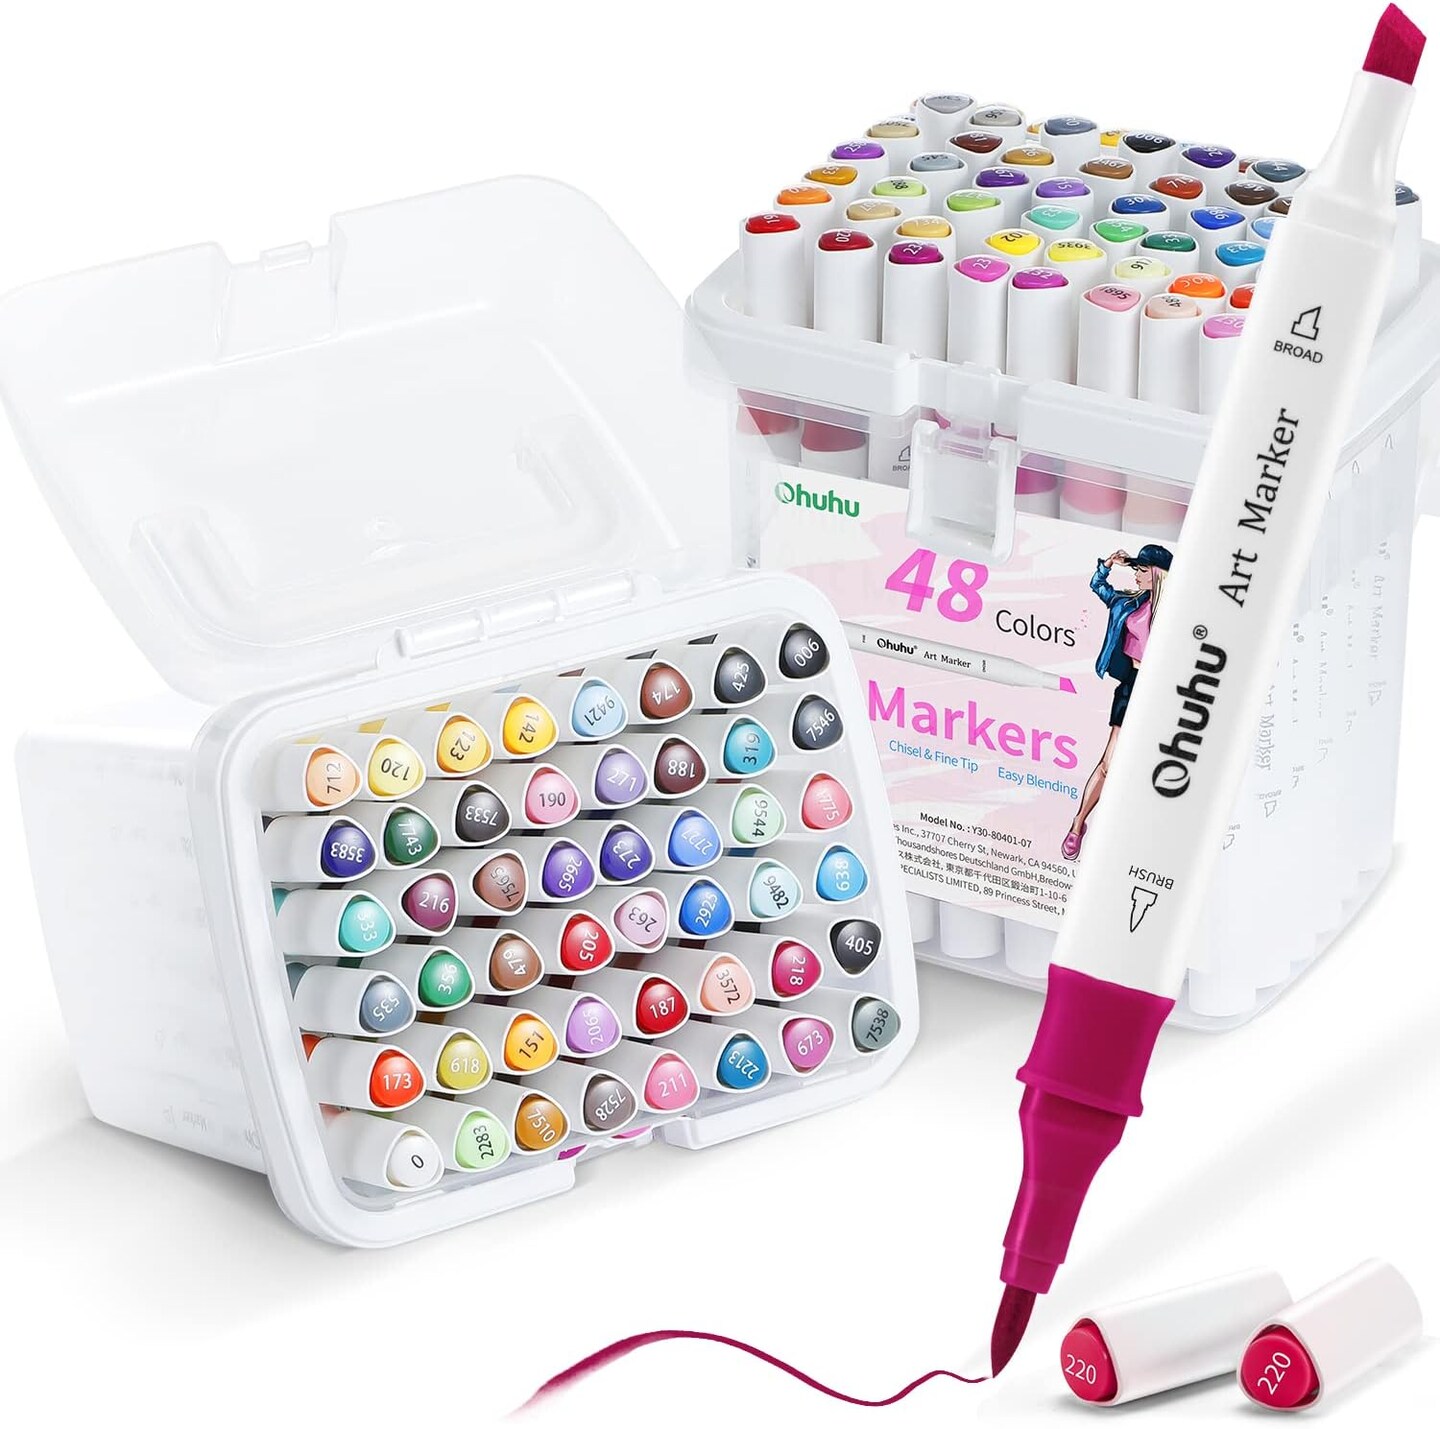 Ohuhu Alcohol Art Marker Set for Kids, Chisel Brush Dual Tips 48-color